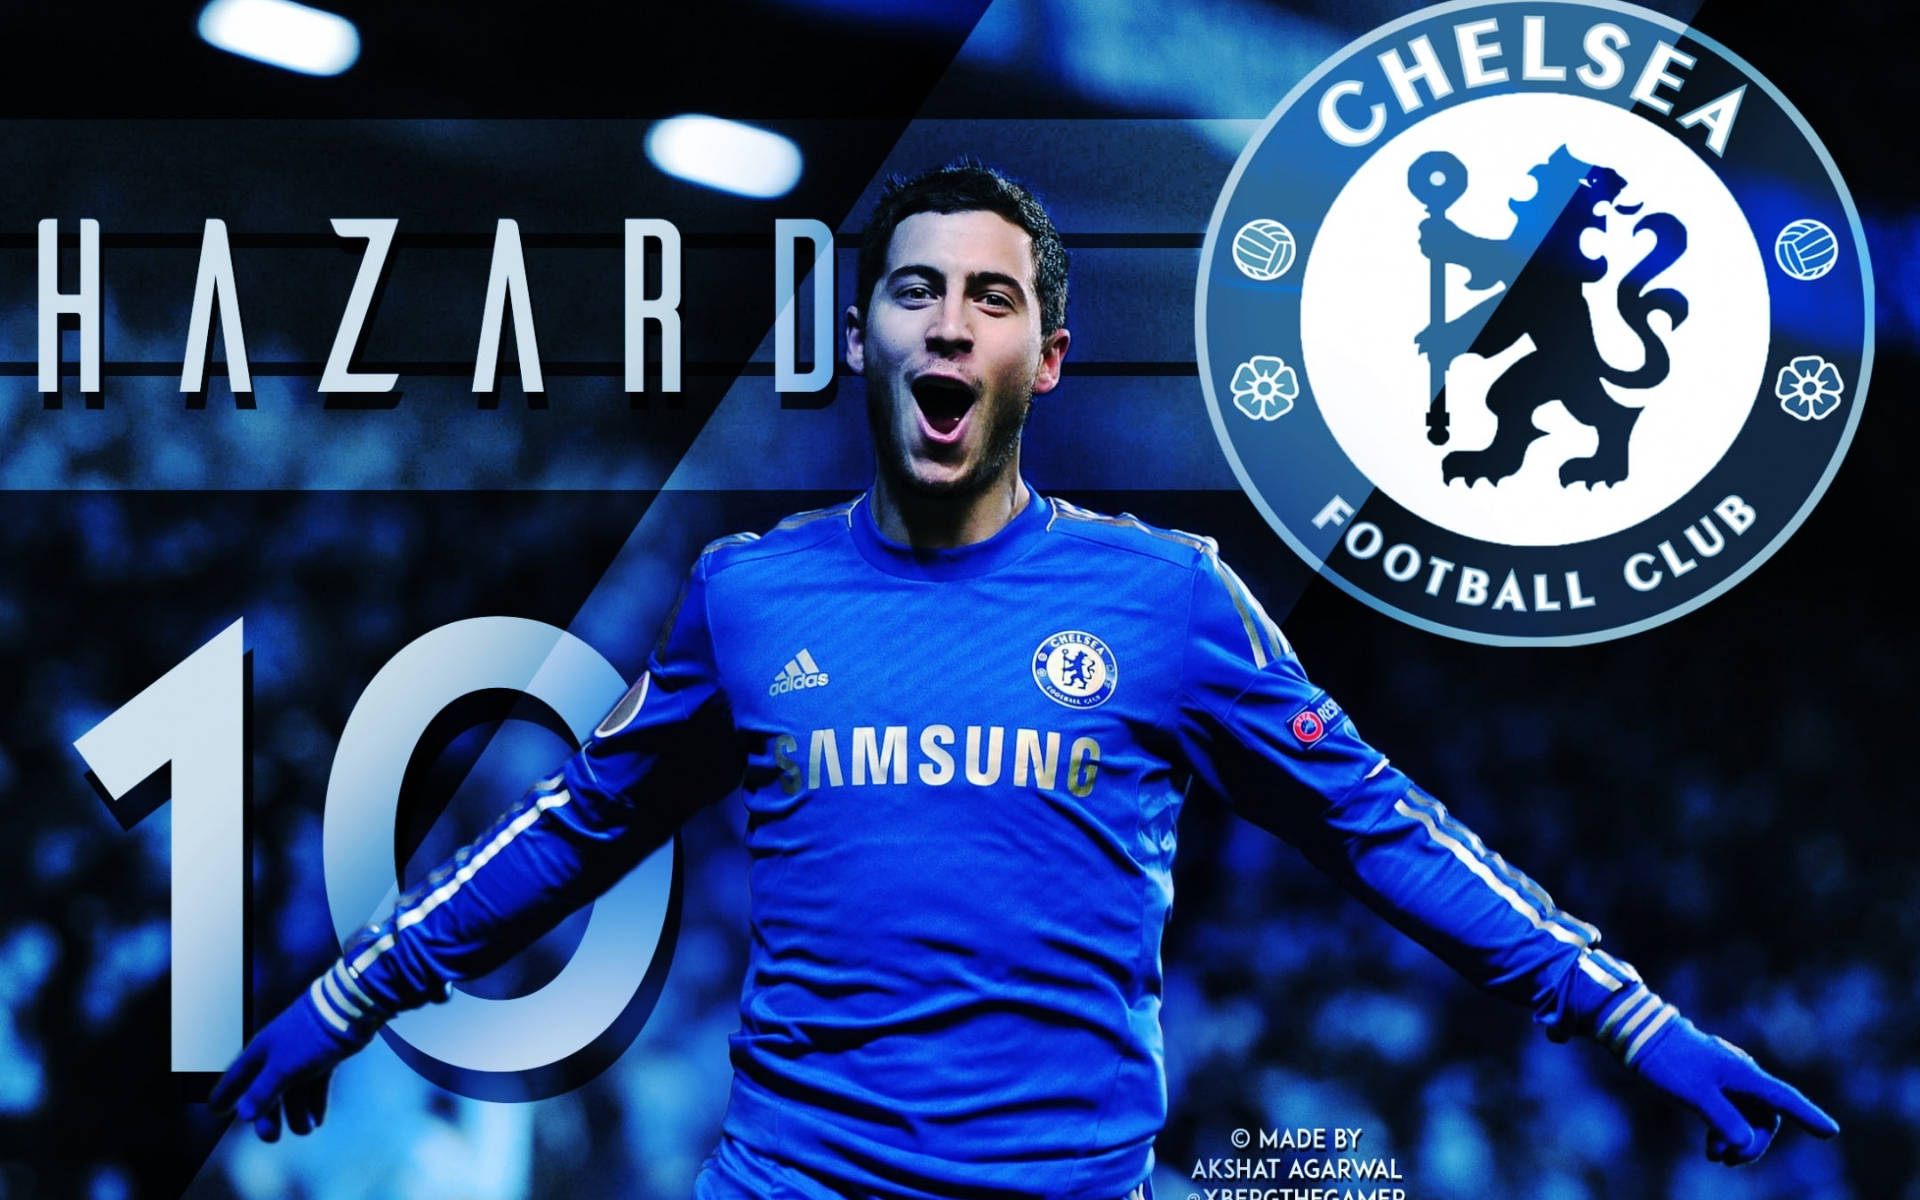 Chelsea Hazard Digital Cover